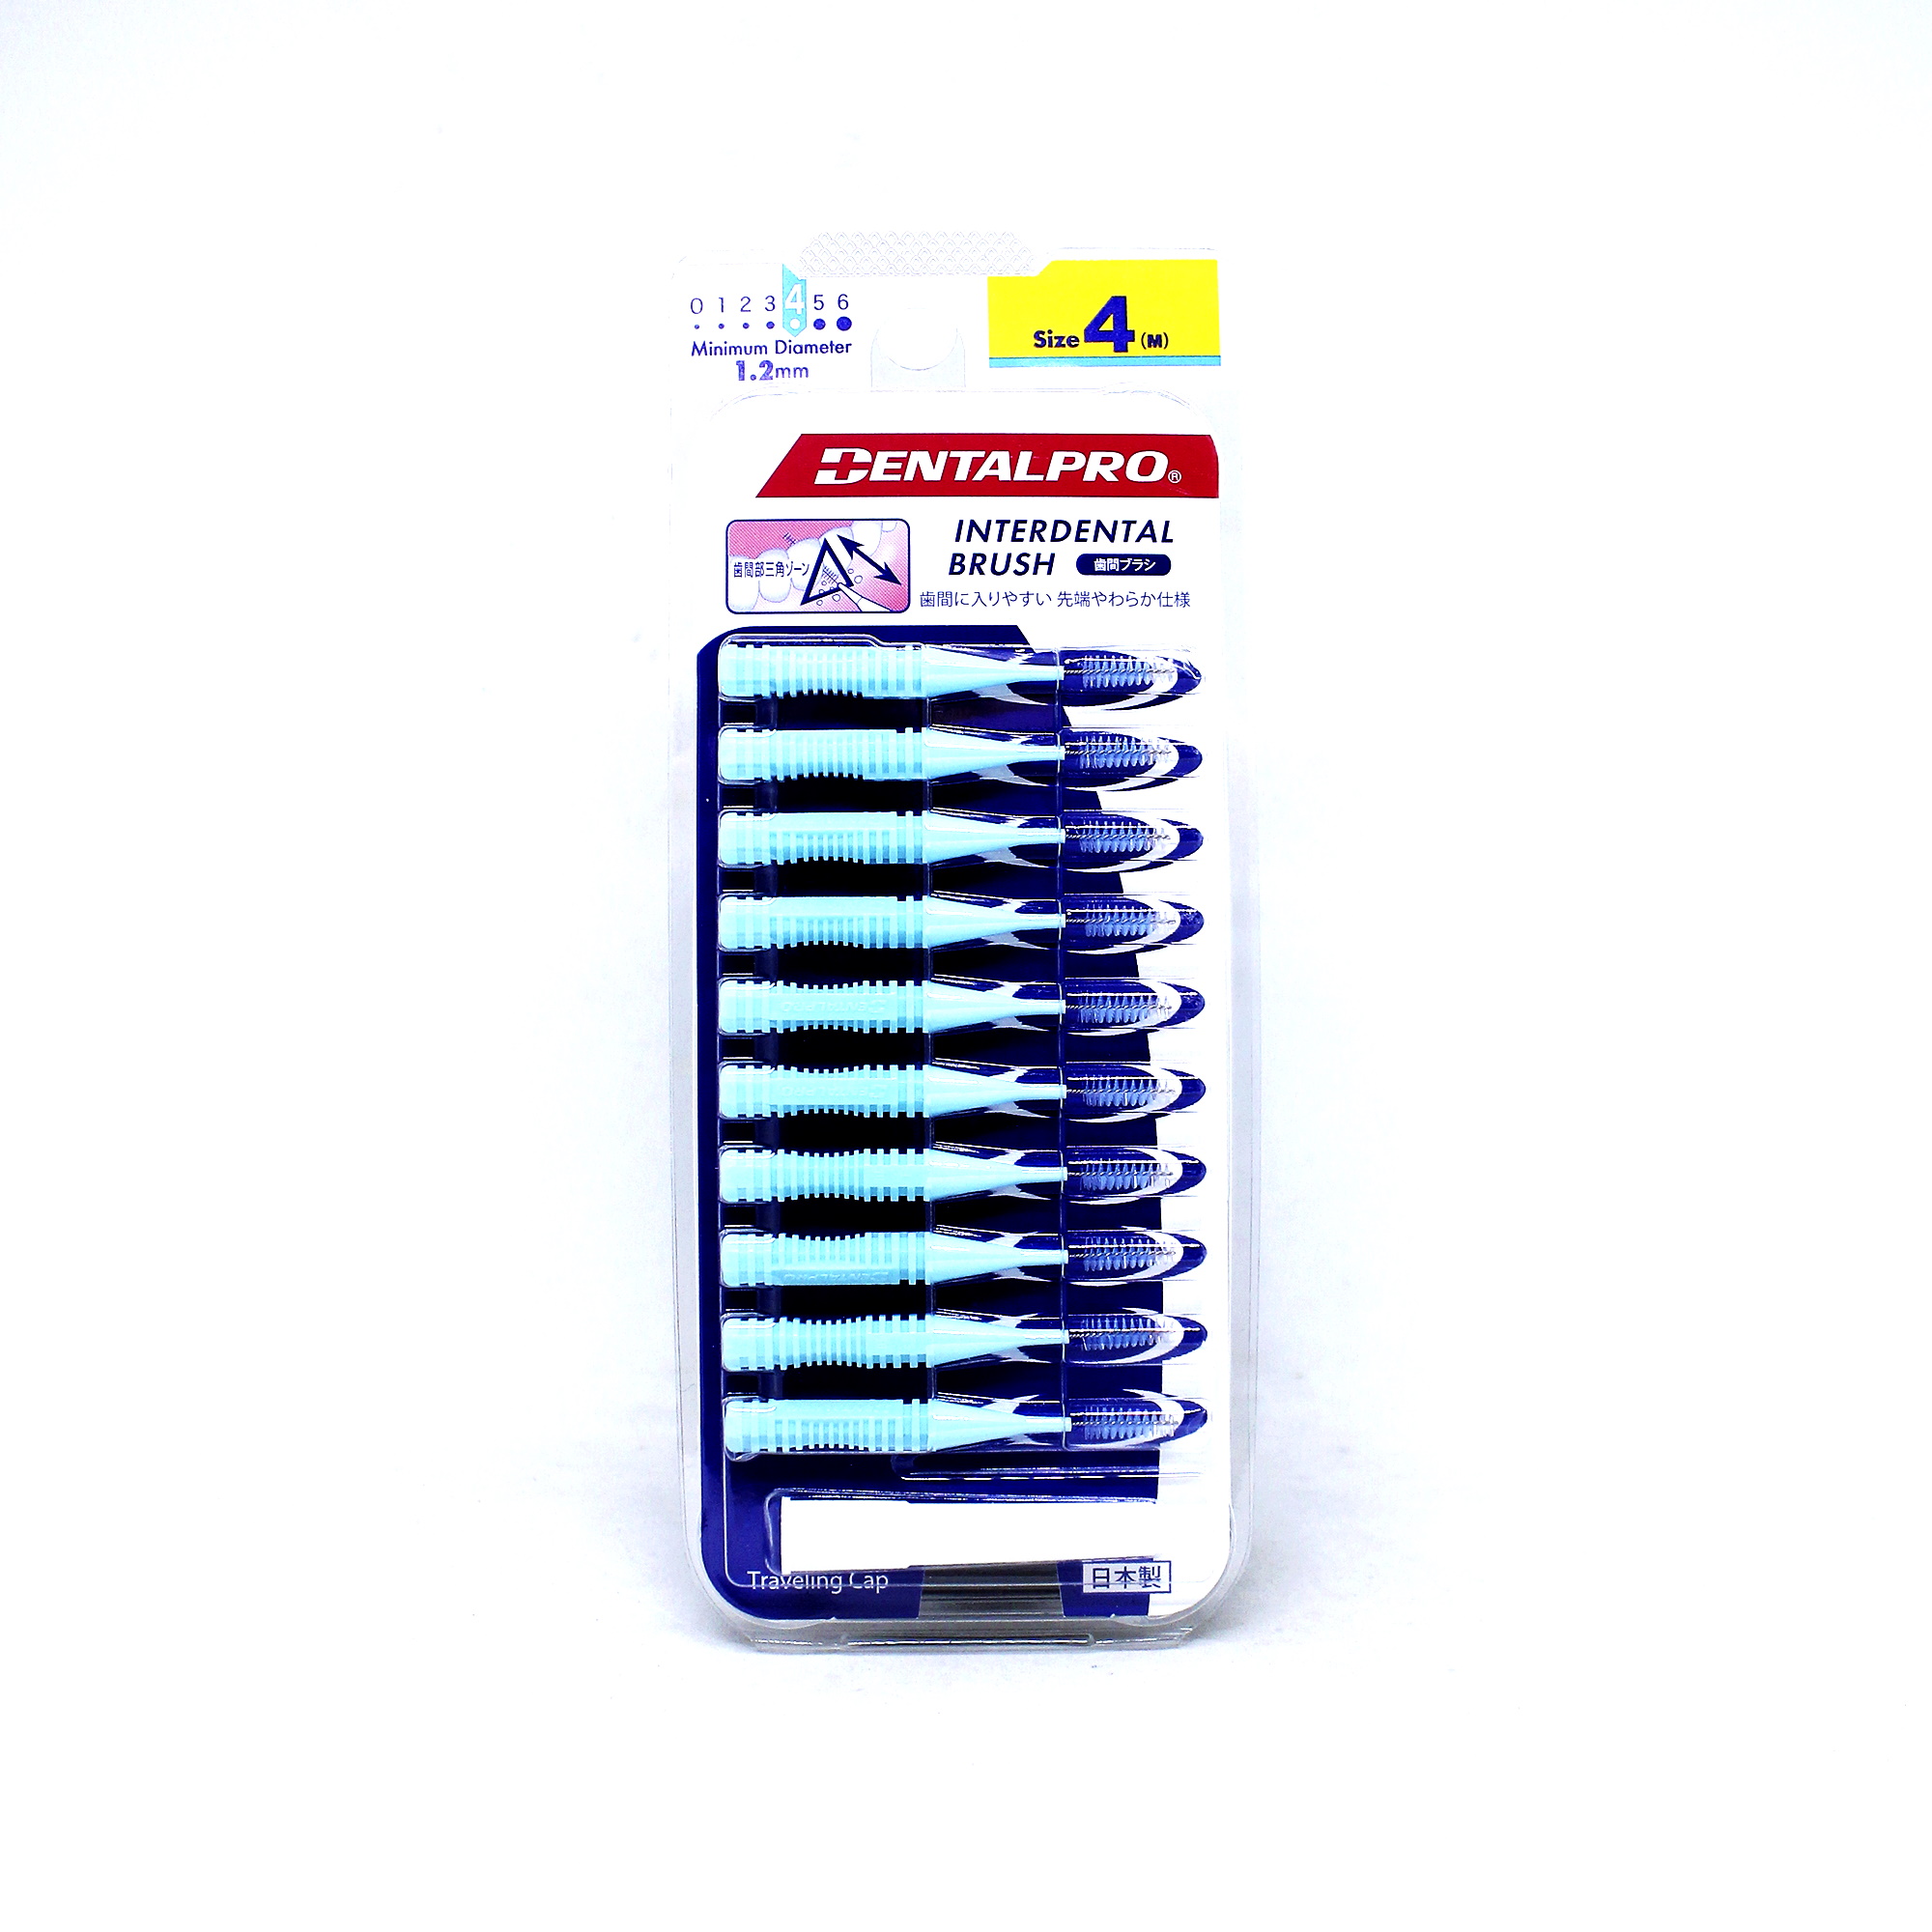 Dentalpro Interdental Brush Size 4